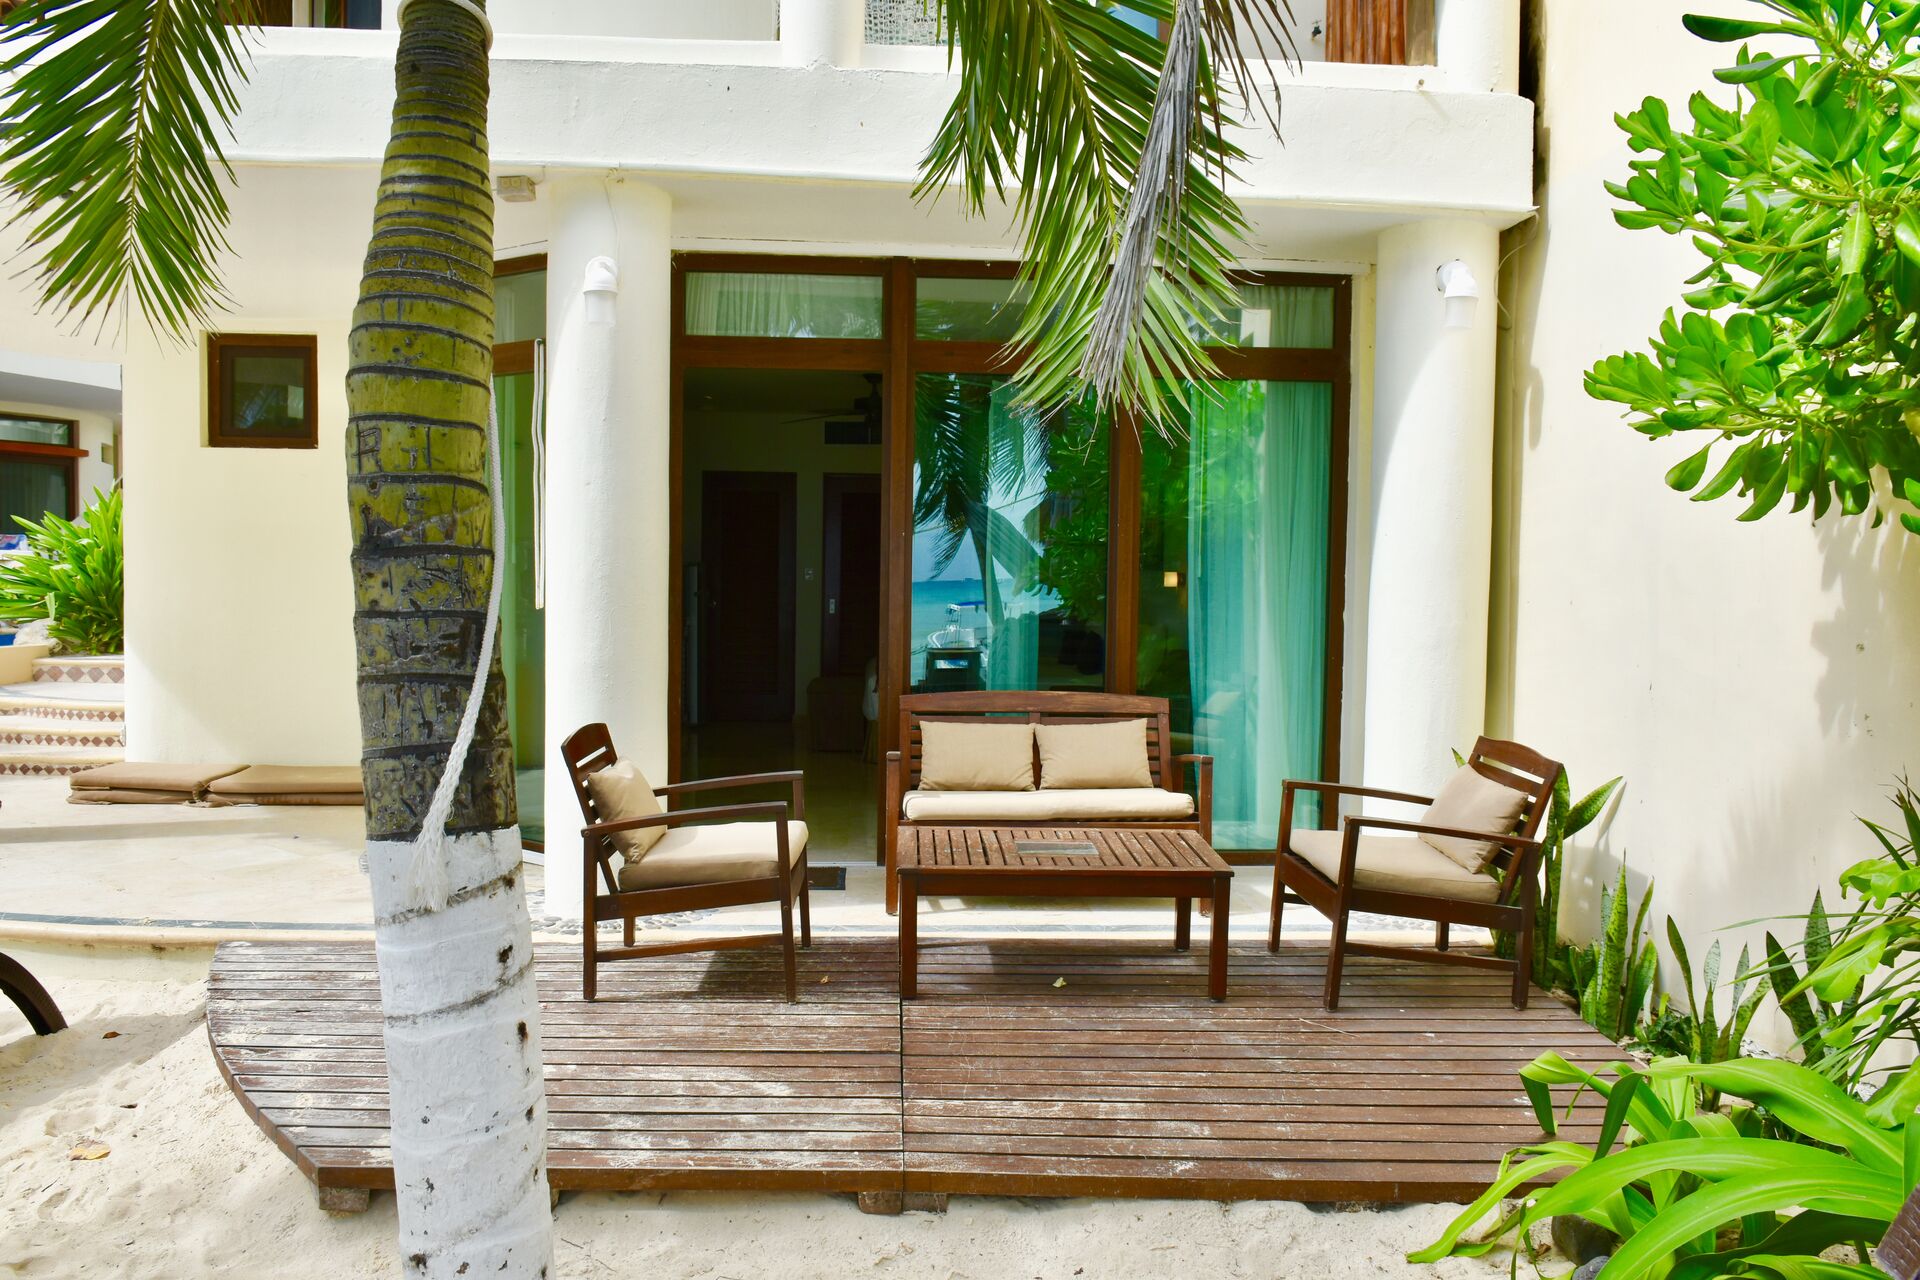 Ocean front, private patio.